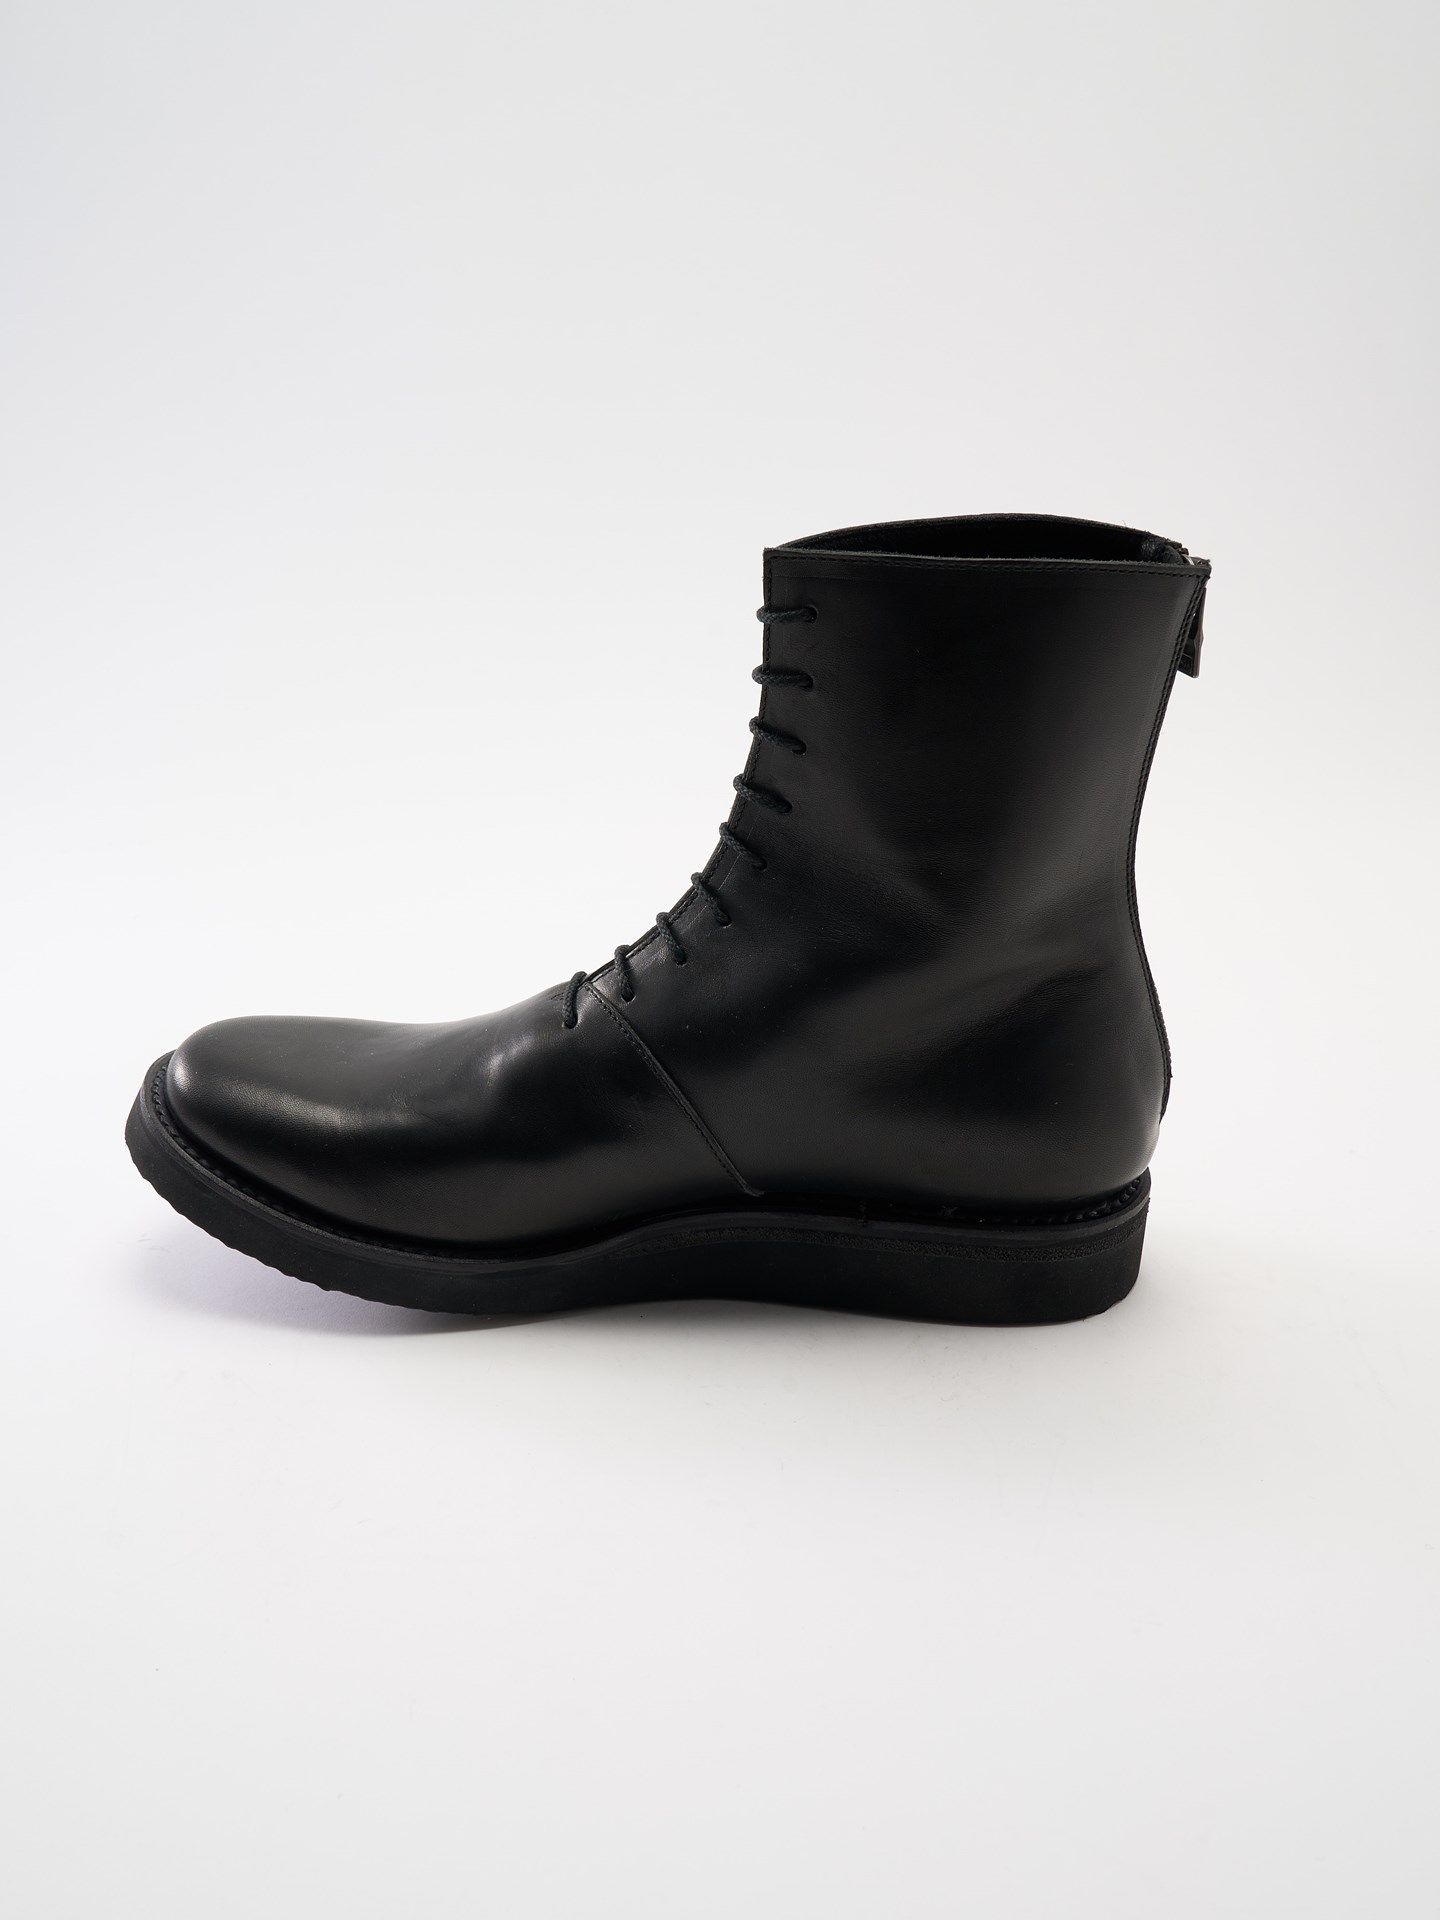 wjk - 【予約品】 back zip boots(function sole) /ミドルブーツ 